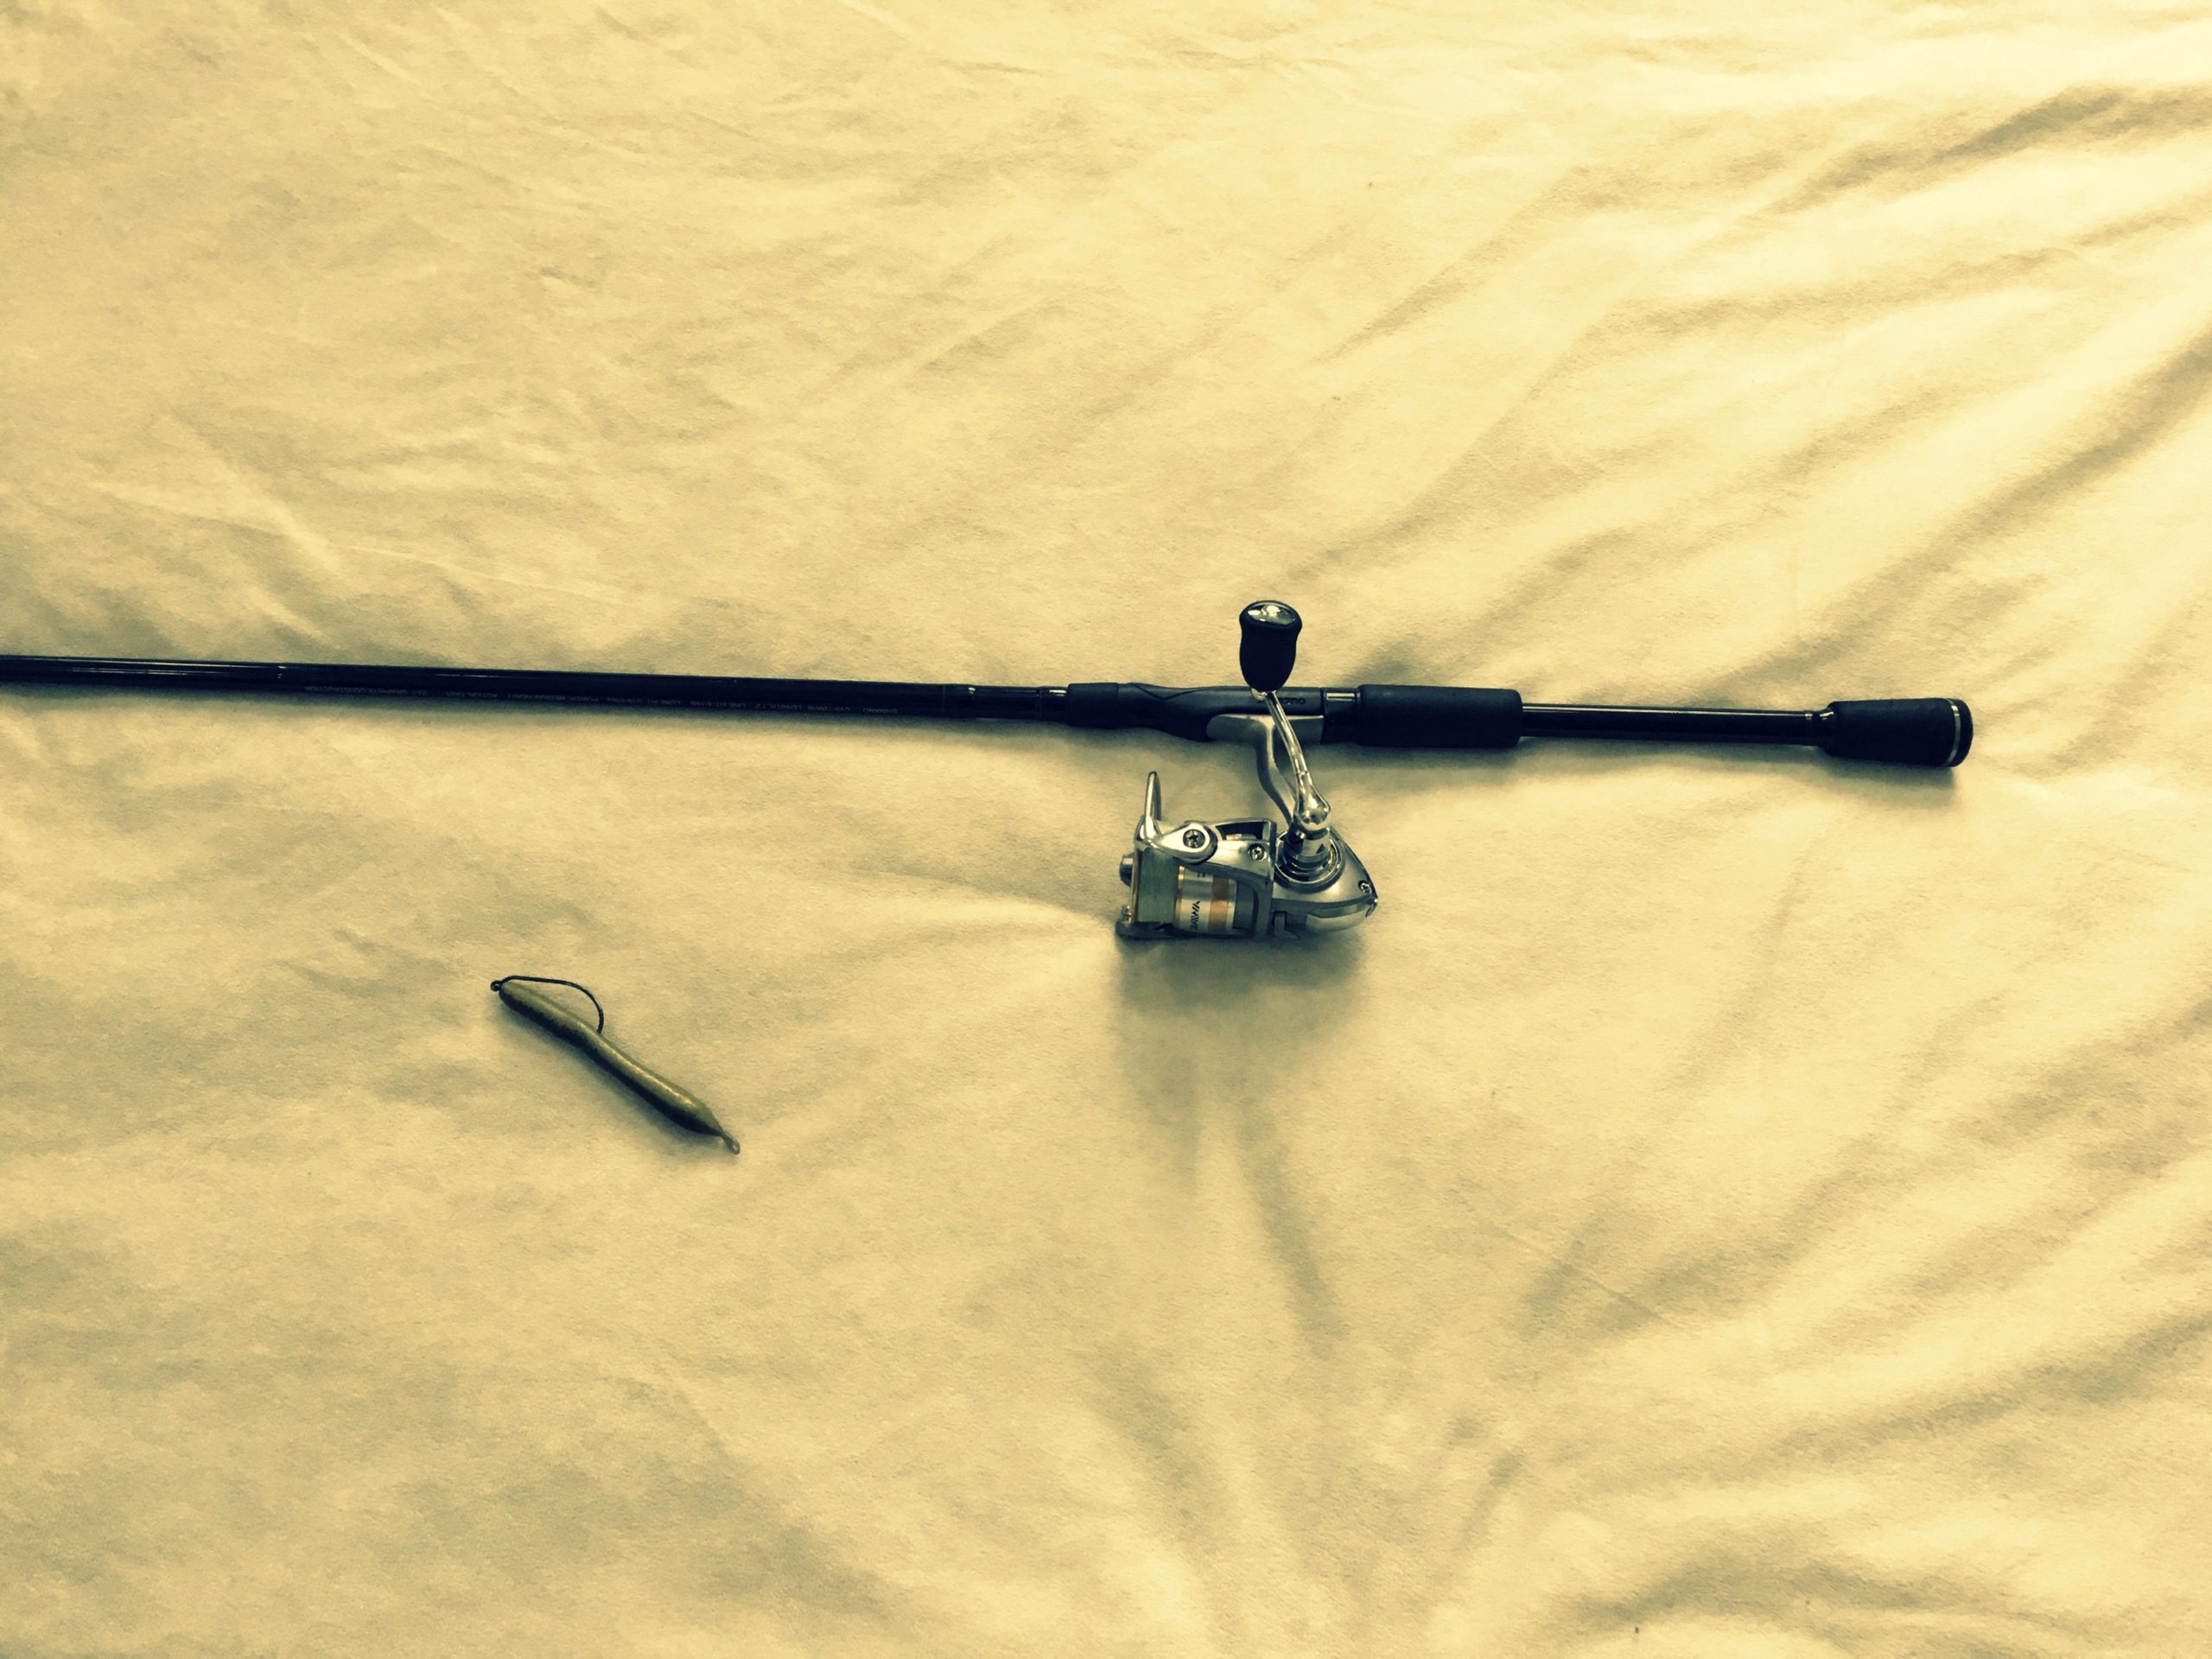 Shimano Crucial Spinning Rod, Freshwater Fishing